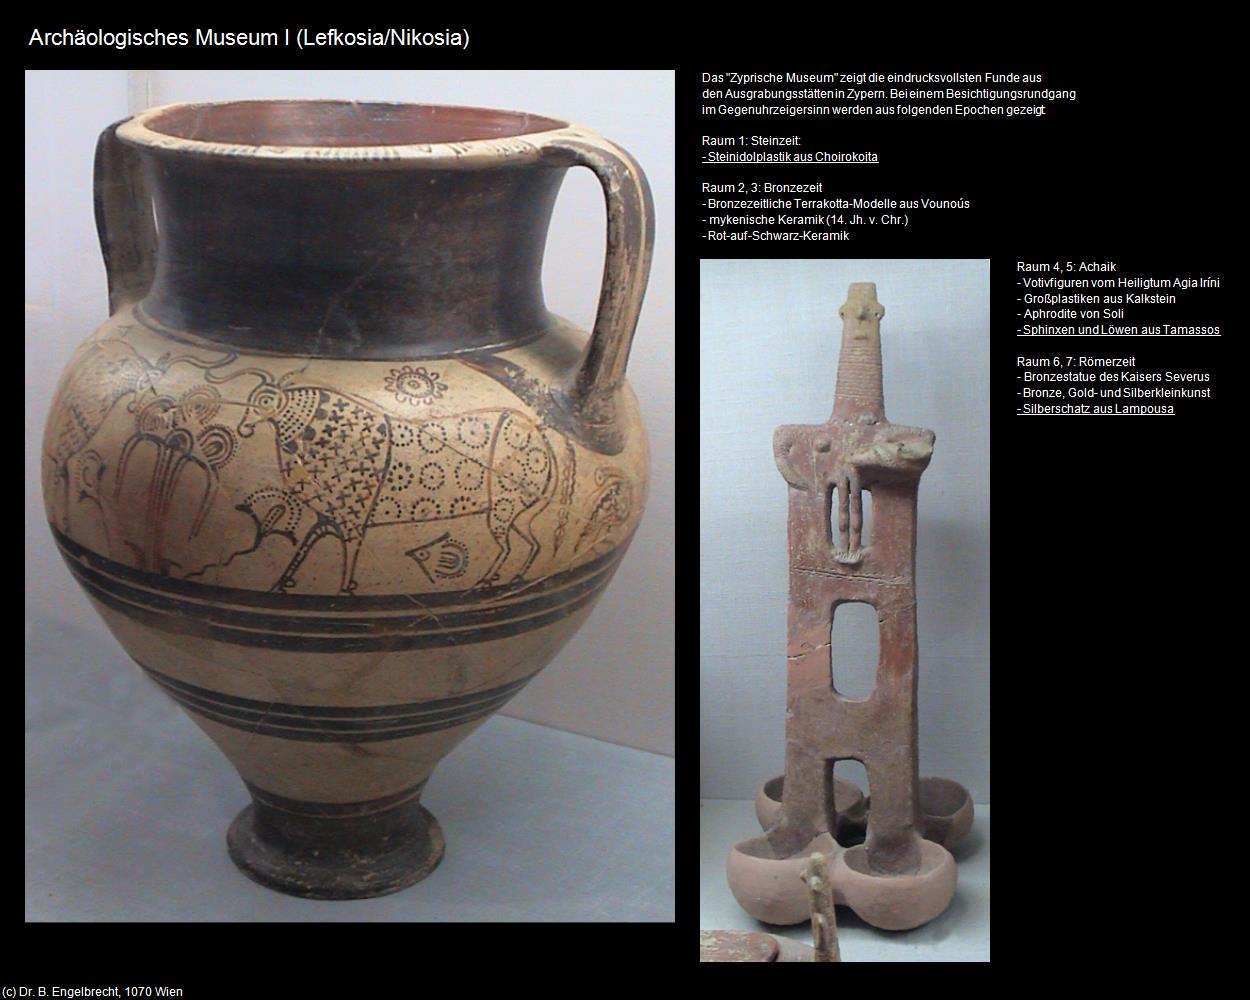 Archäologisches Museum I (Lefkosia-Nikosia/CY) in ZYPERN-Insel der Aphrodite(c)B.Engelbrecht